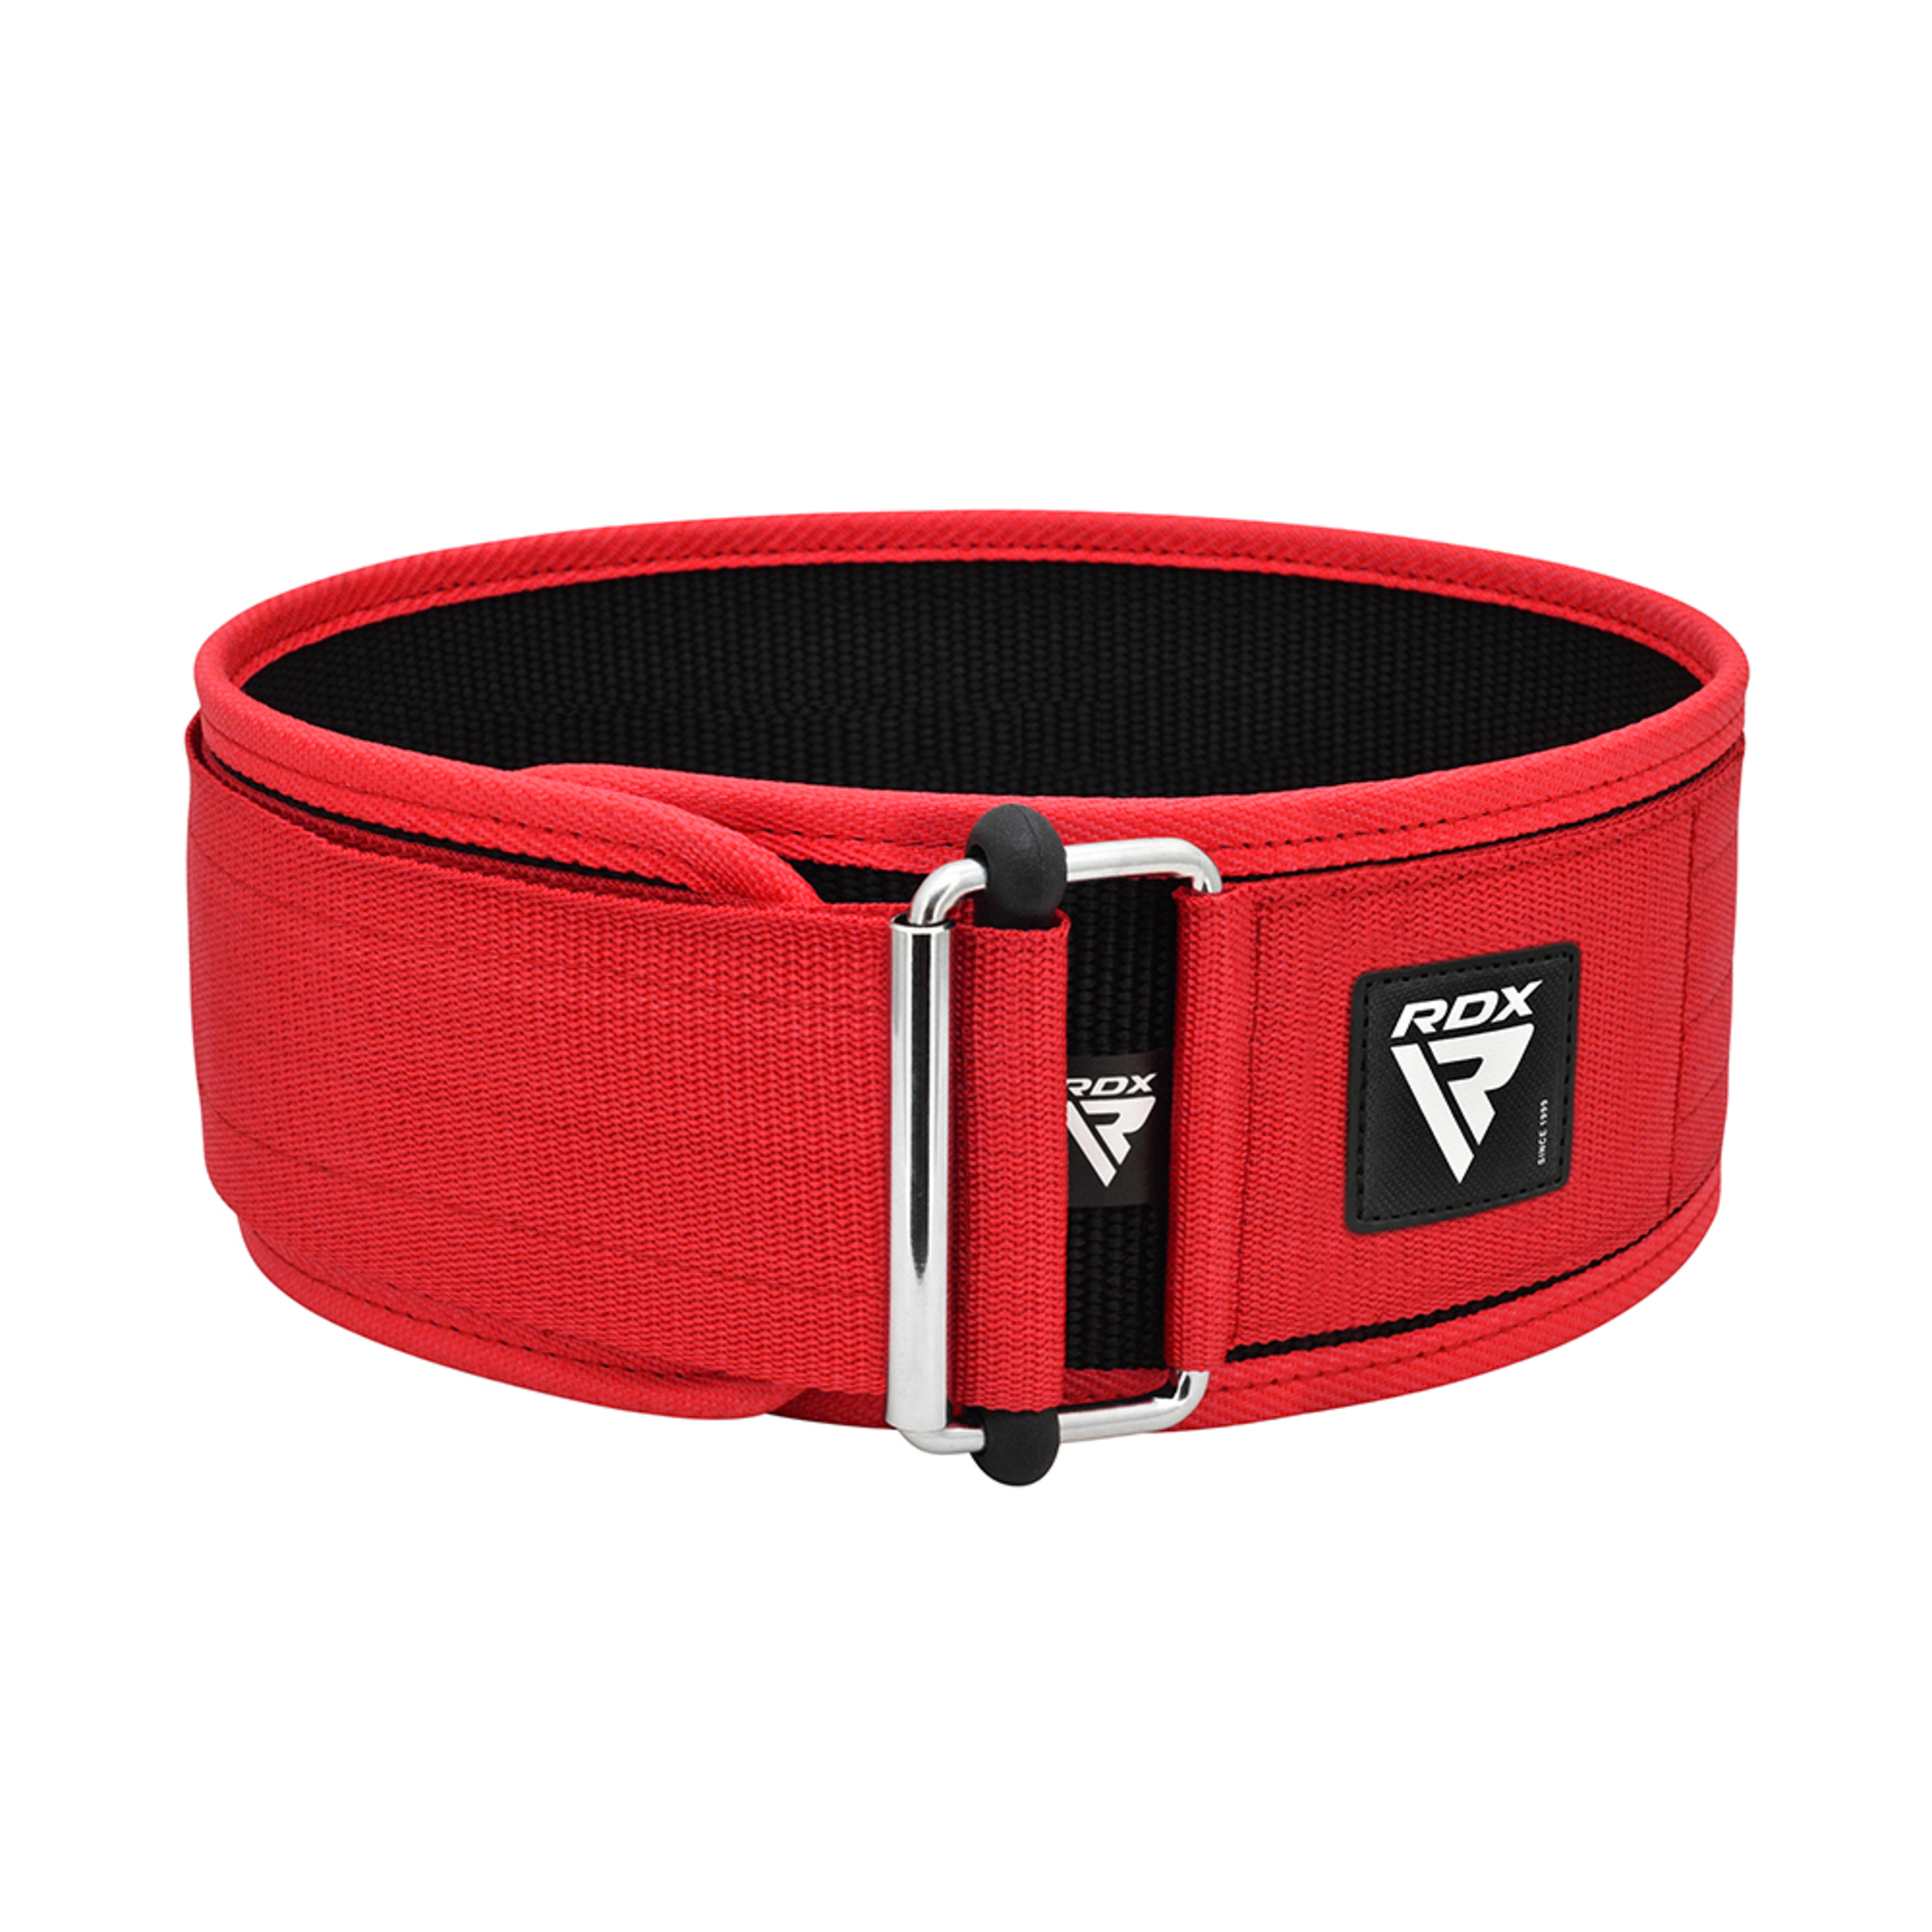 Cinturón De Fitness Rdx Wbs-rx1 - rojo - 